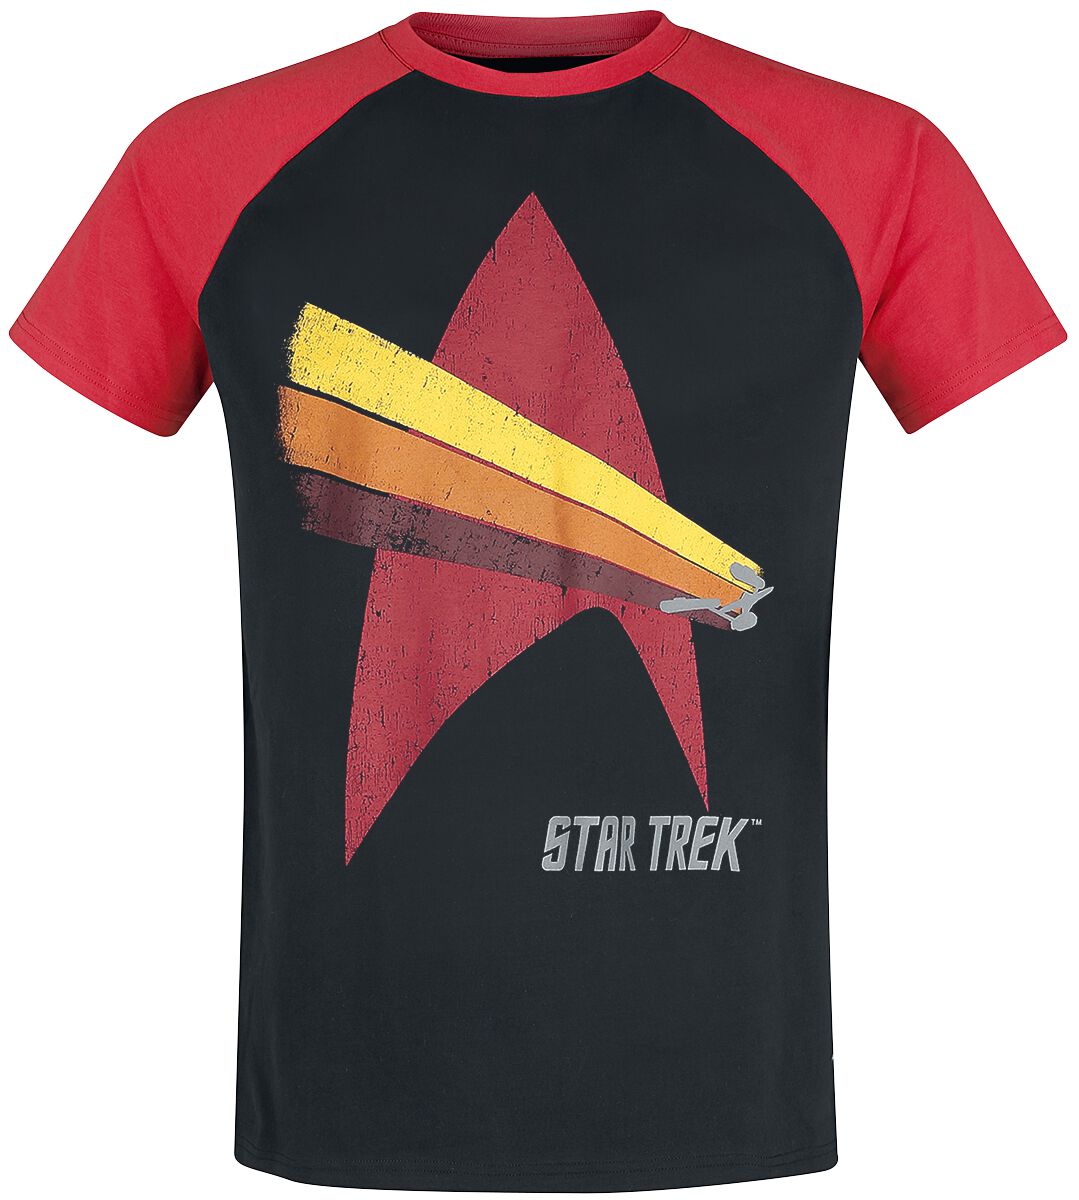 Star Trek Free Flight T-Shirt black red